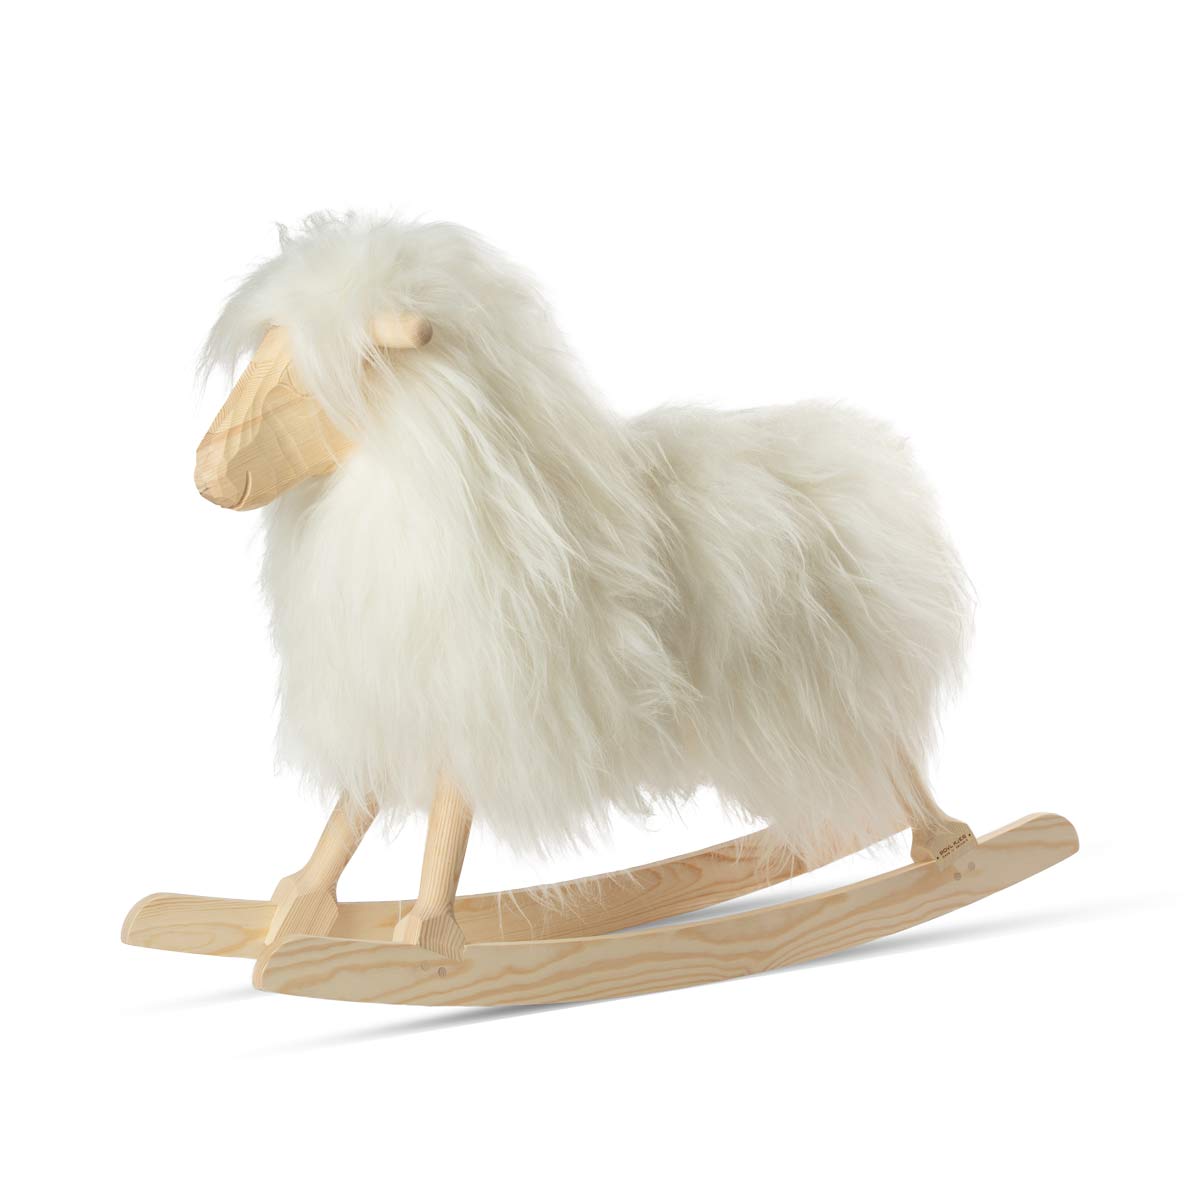 The Rocking Sheep │ Povl Kjer Design │ Made in Denmark │ Natural White Long Wool │ Large